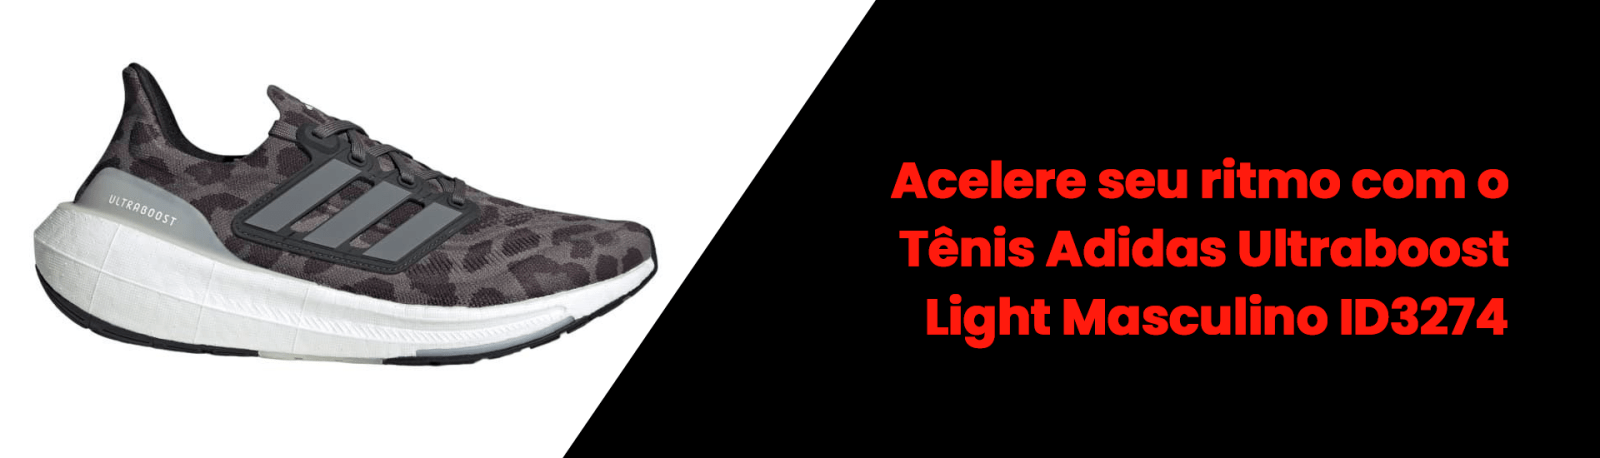 Acelere seu ritmo com o Tênis Adidas Ultraboost Light Masculino ID3274